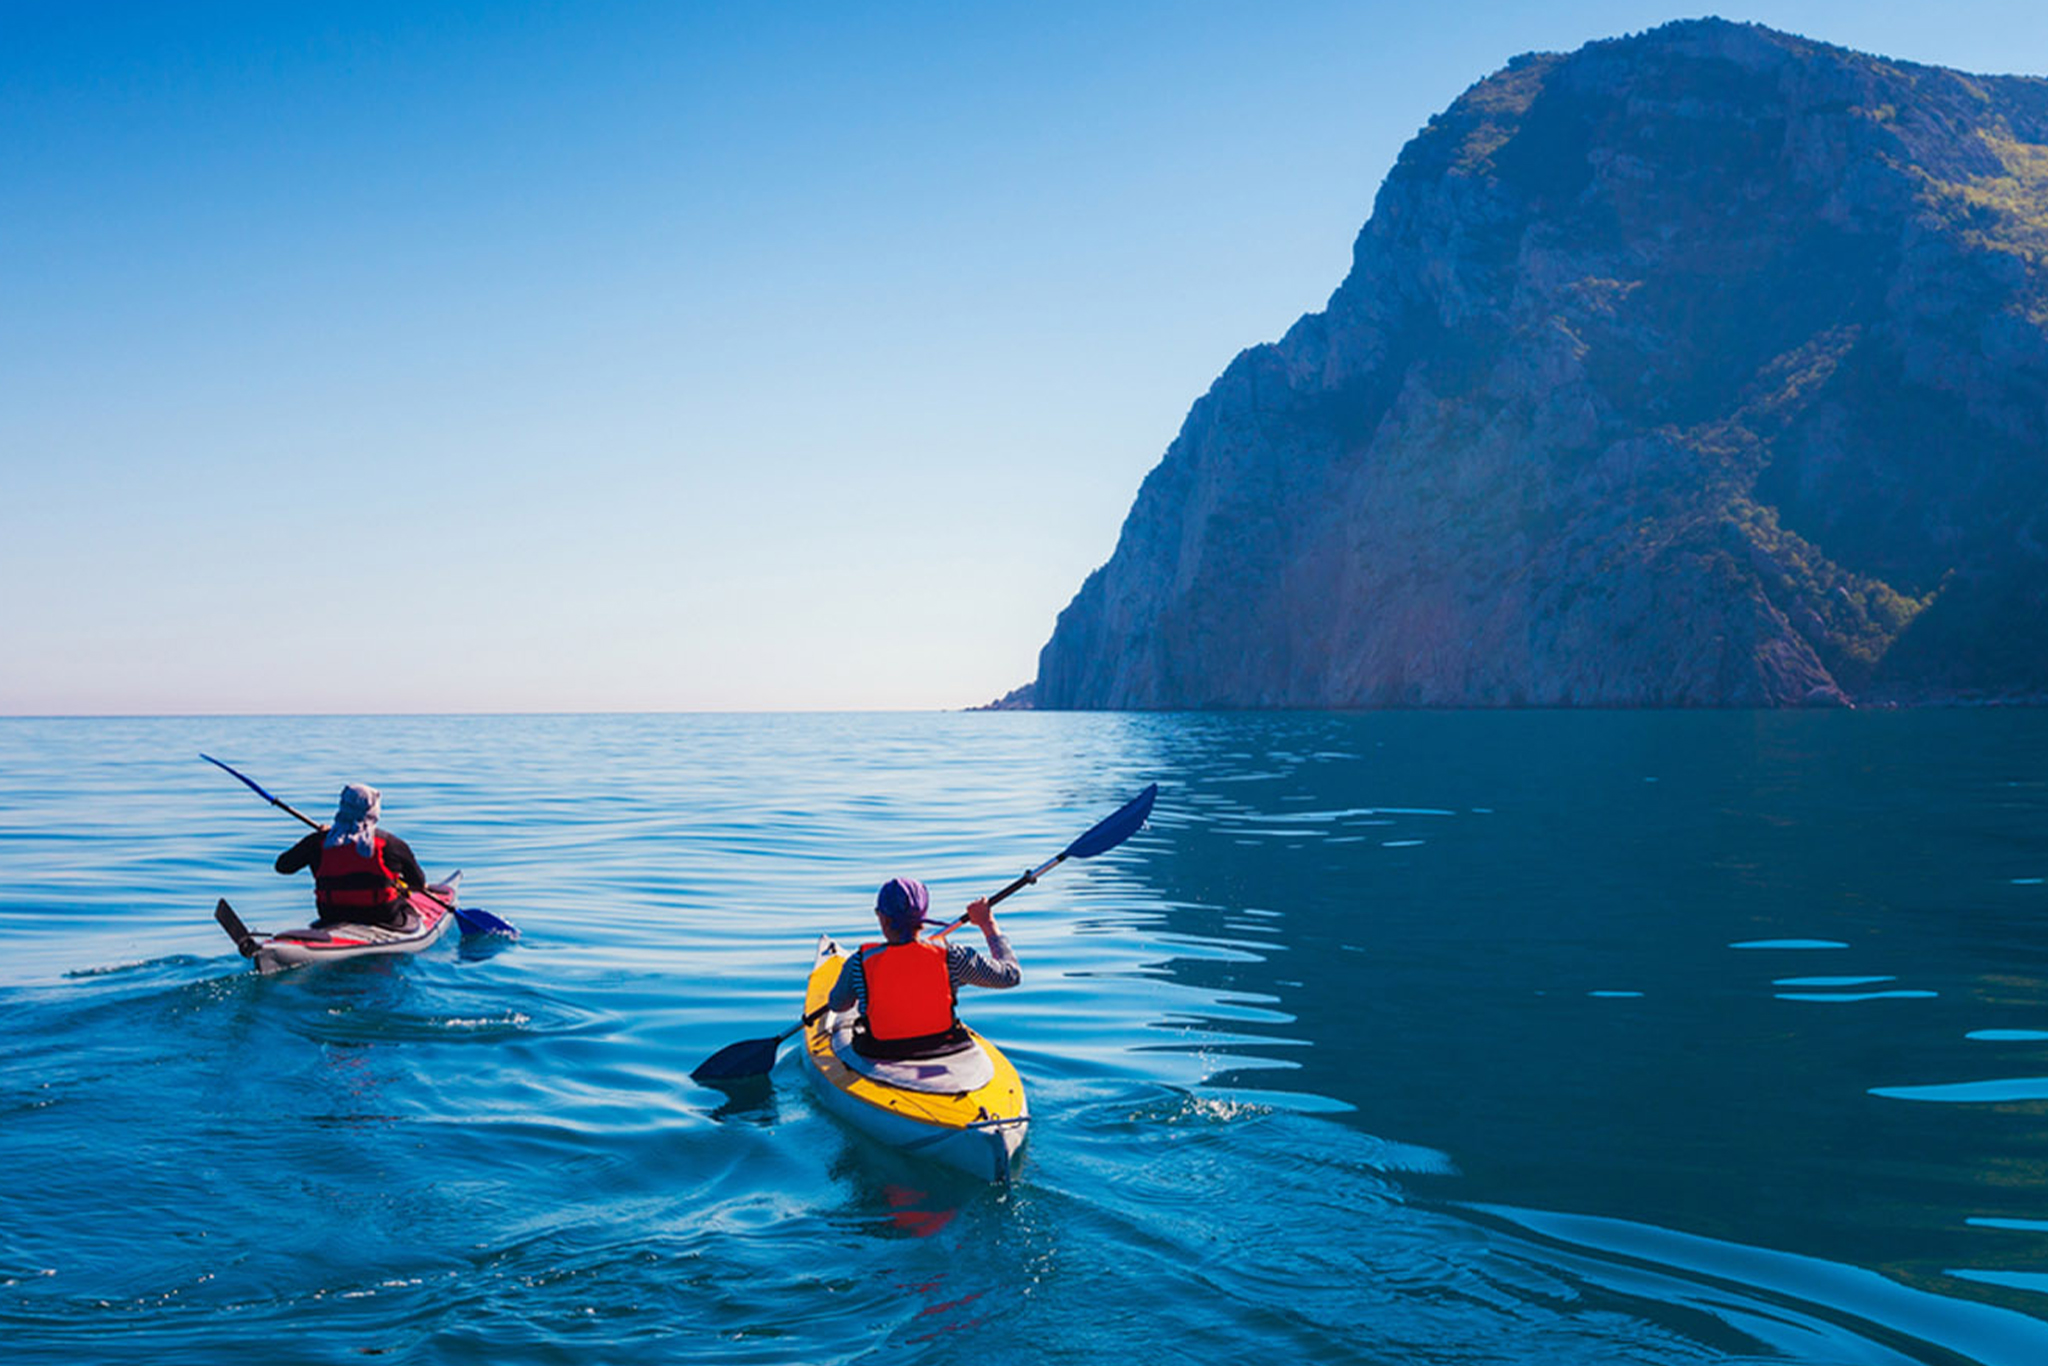 Kayaking through open waterof porto arabia UAE 1